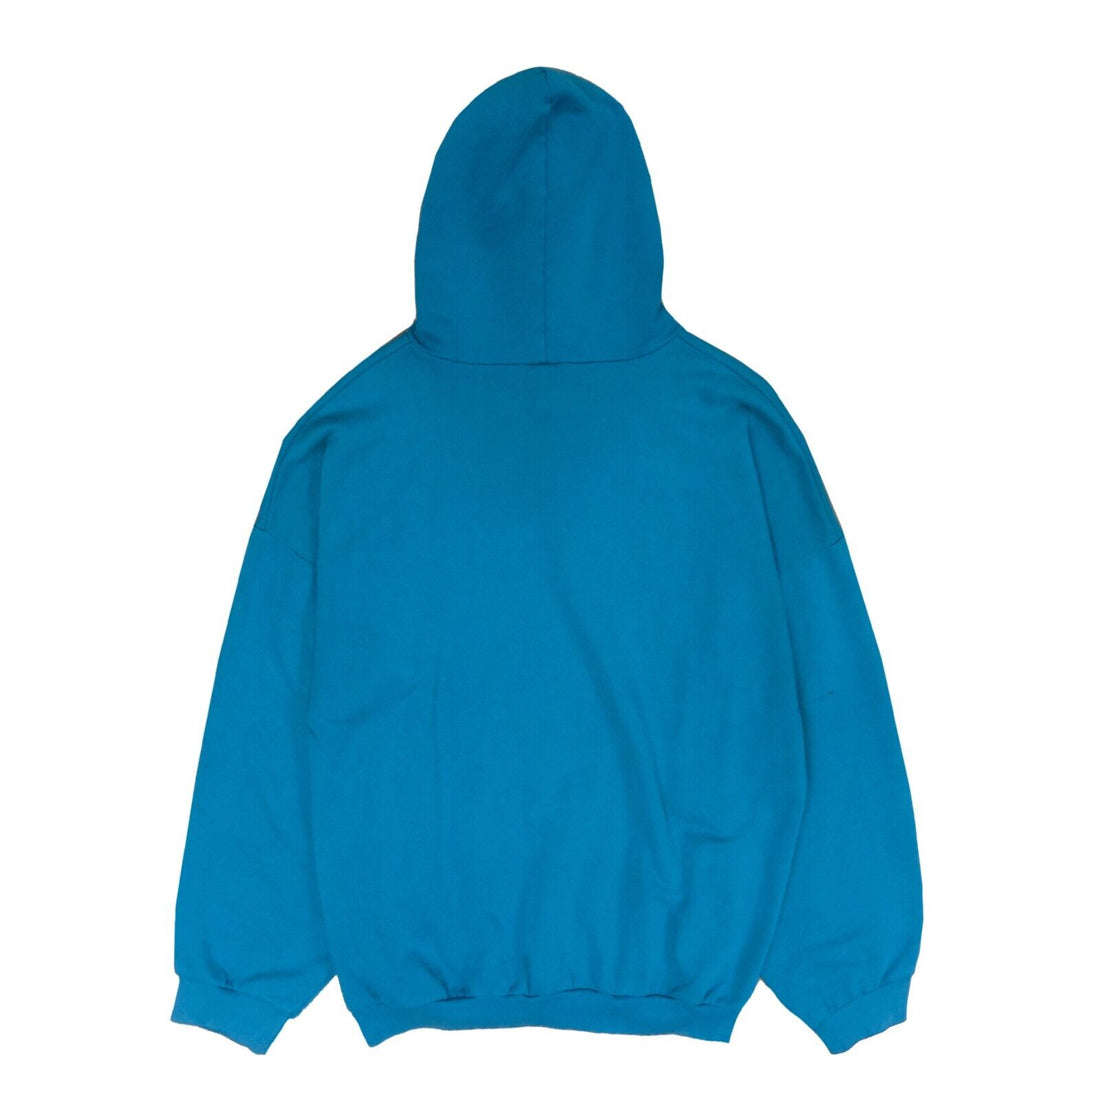 Vintage Nike Sweatshirt Hoodie Size Large Blue Teal Embroidered 80s 90s